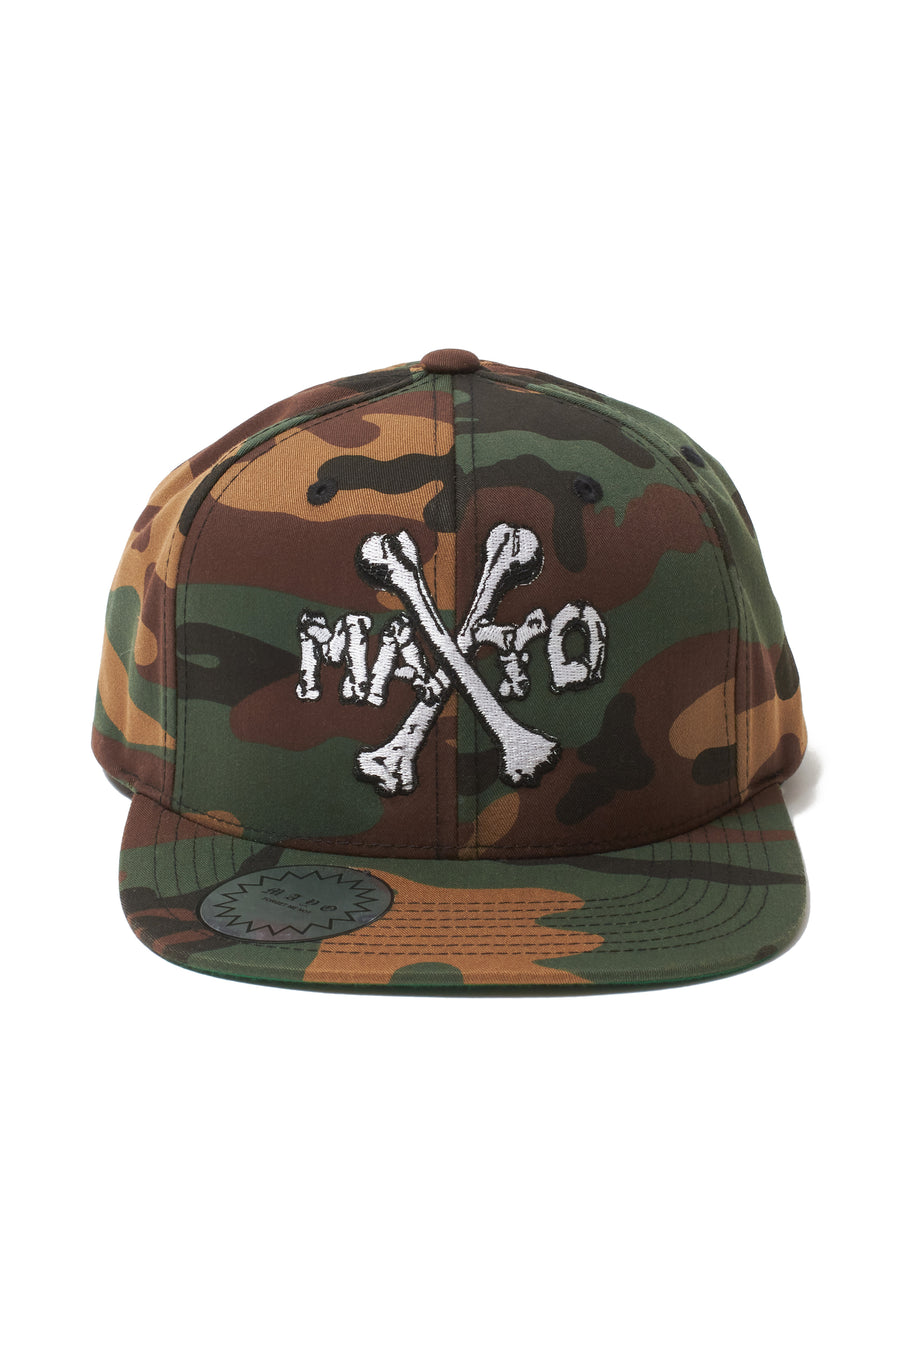 【WEB LIMITED】MAYO CROSS BONE Embroidery CAP - CAMO